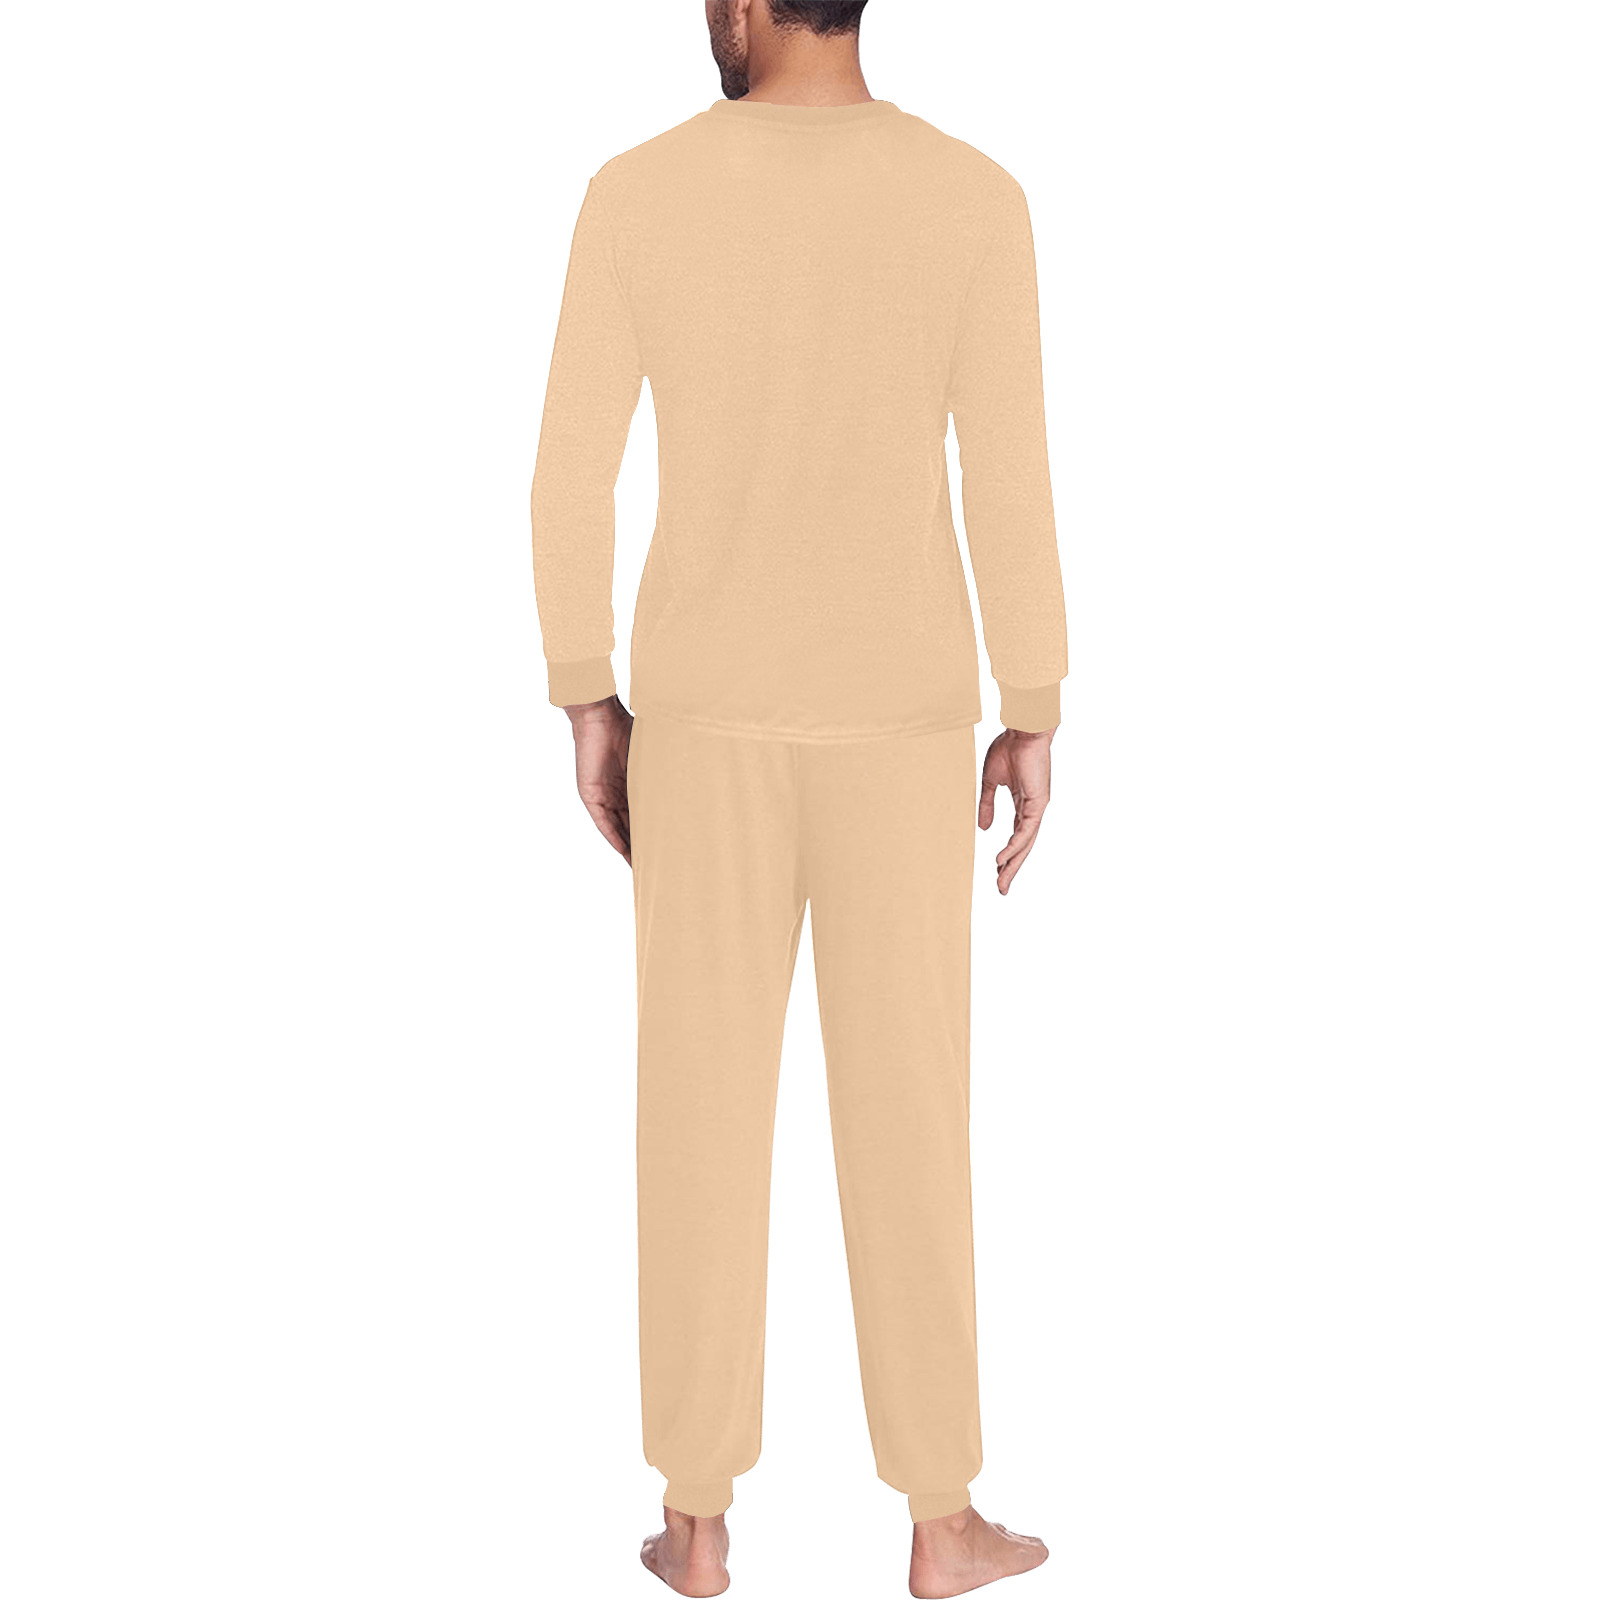 CREAM Men's All Over Print Pajama Set with Custom Cuff